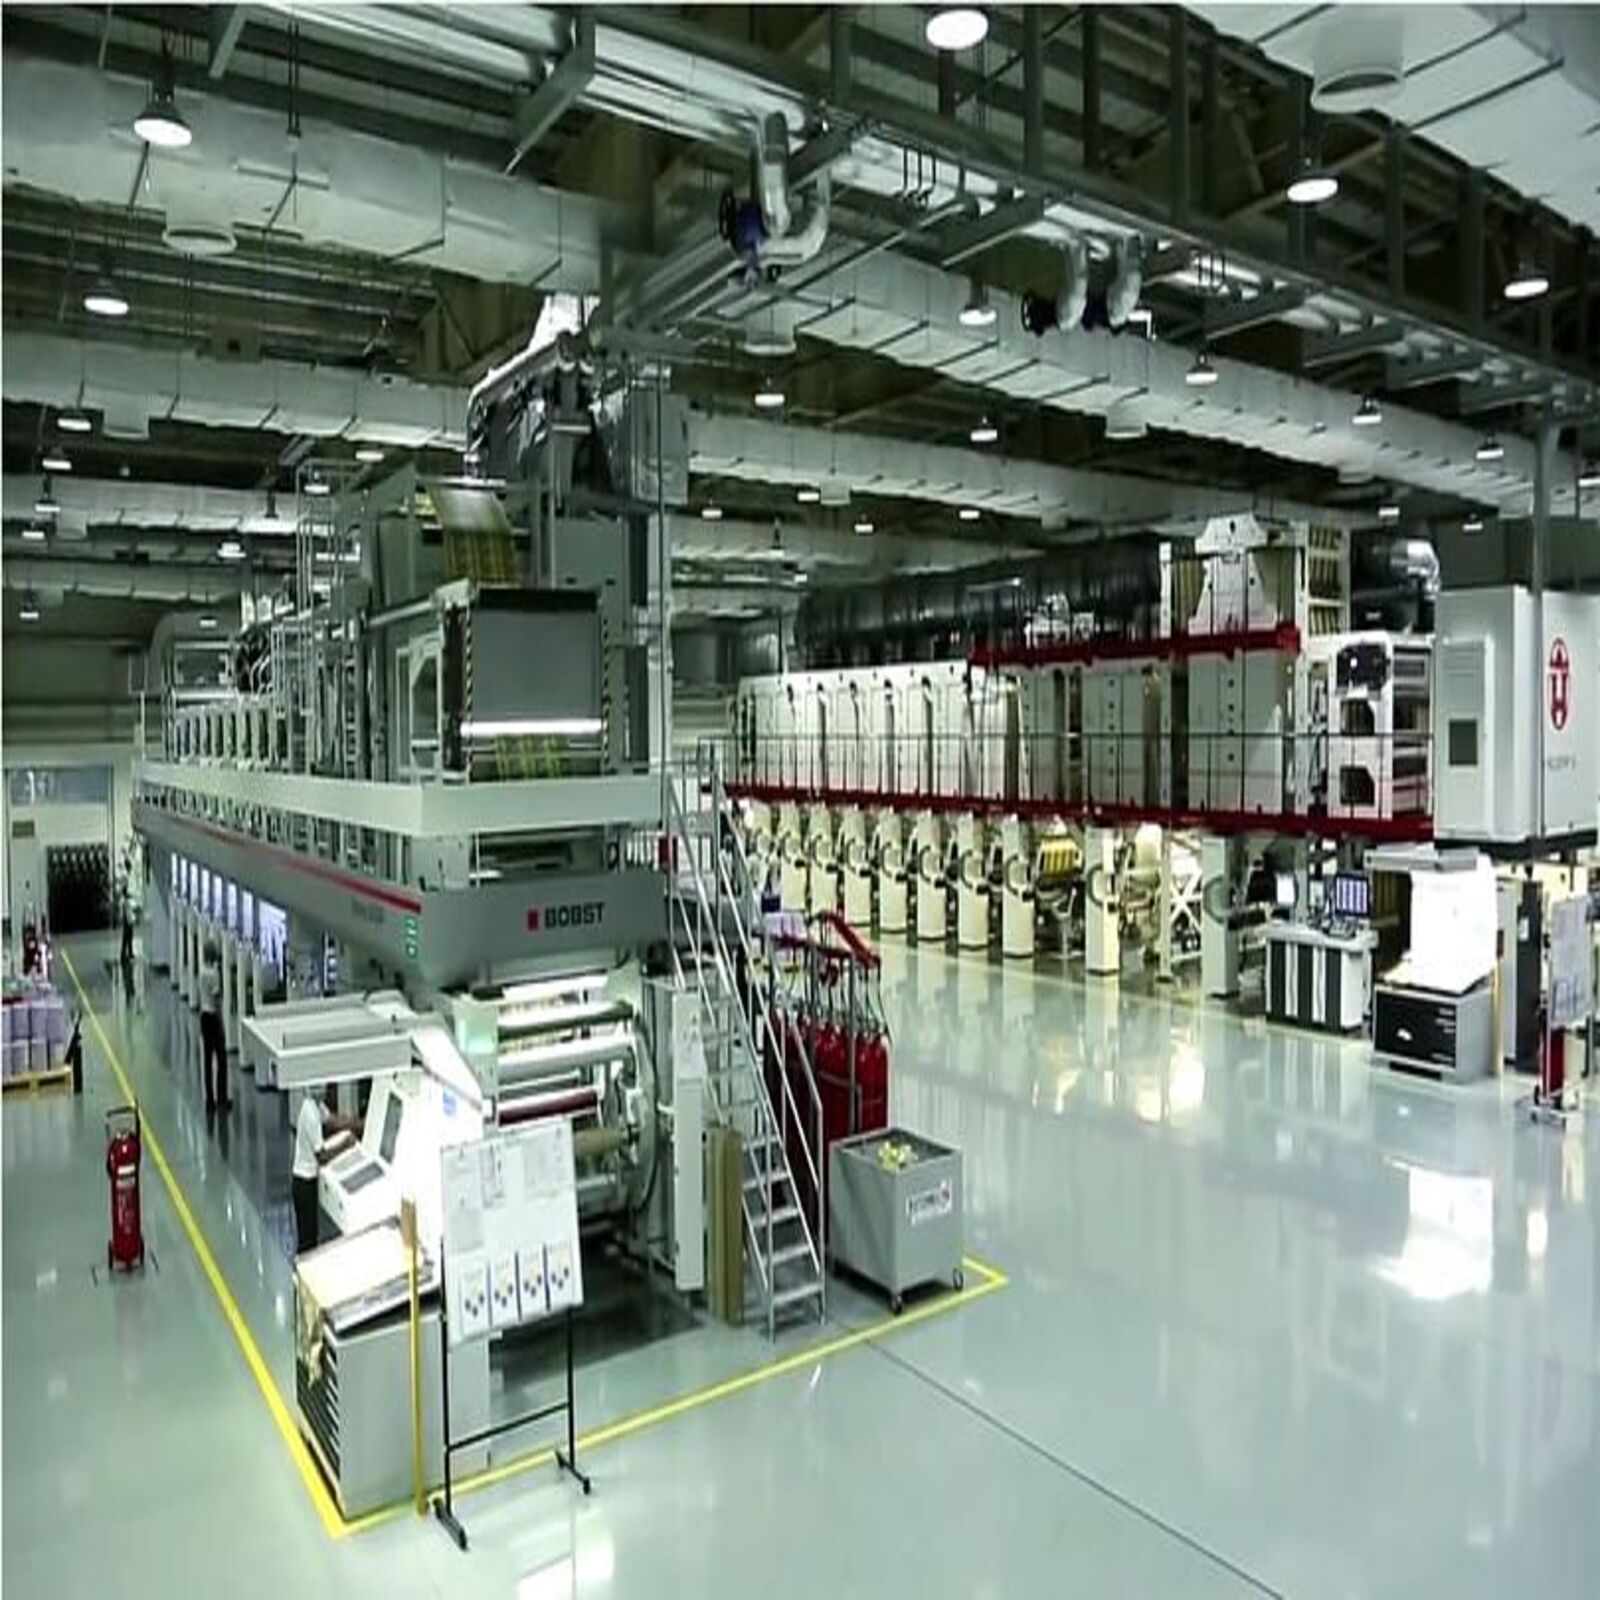 Emirates Printing Press in Dubai Industrial City